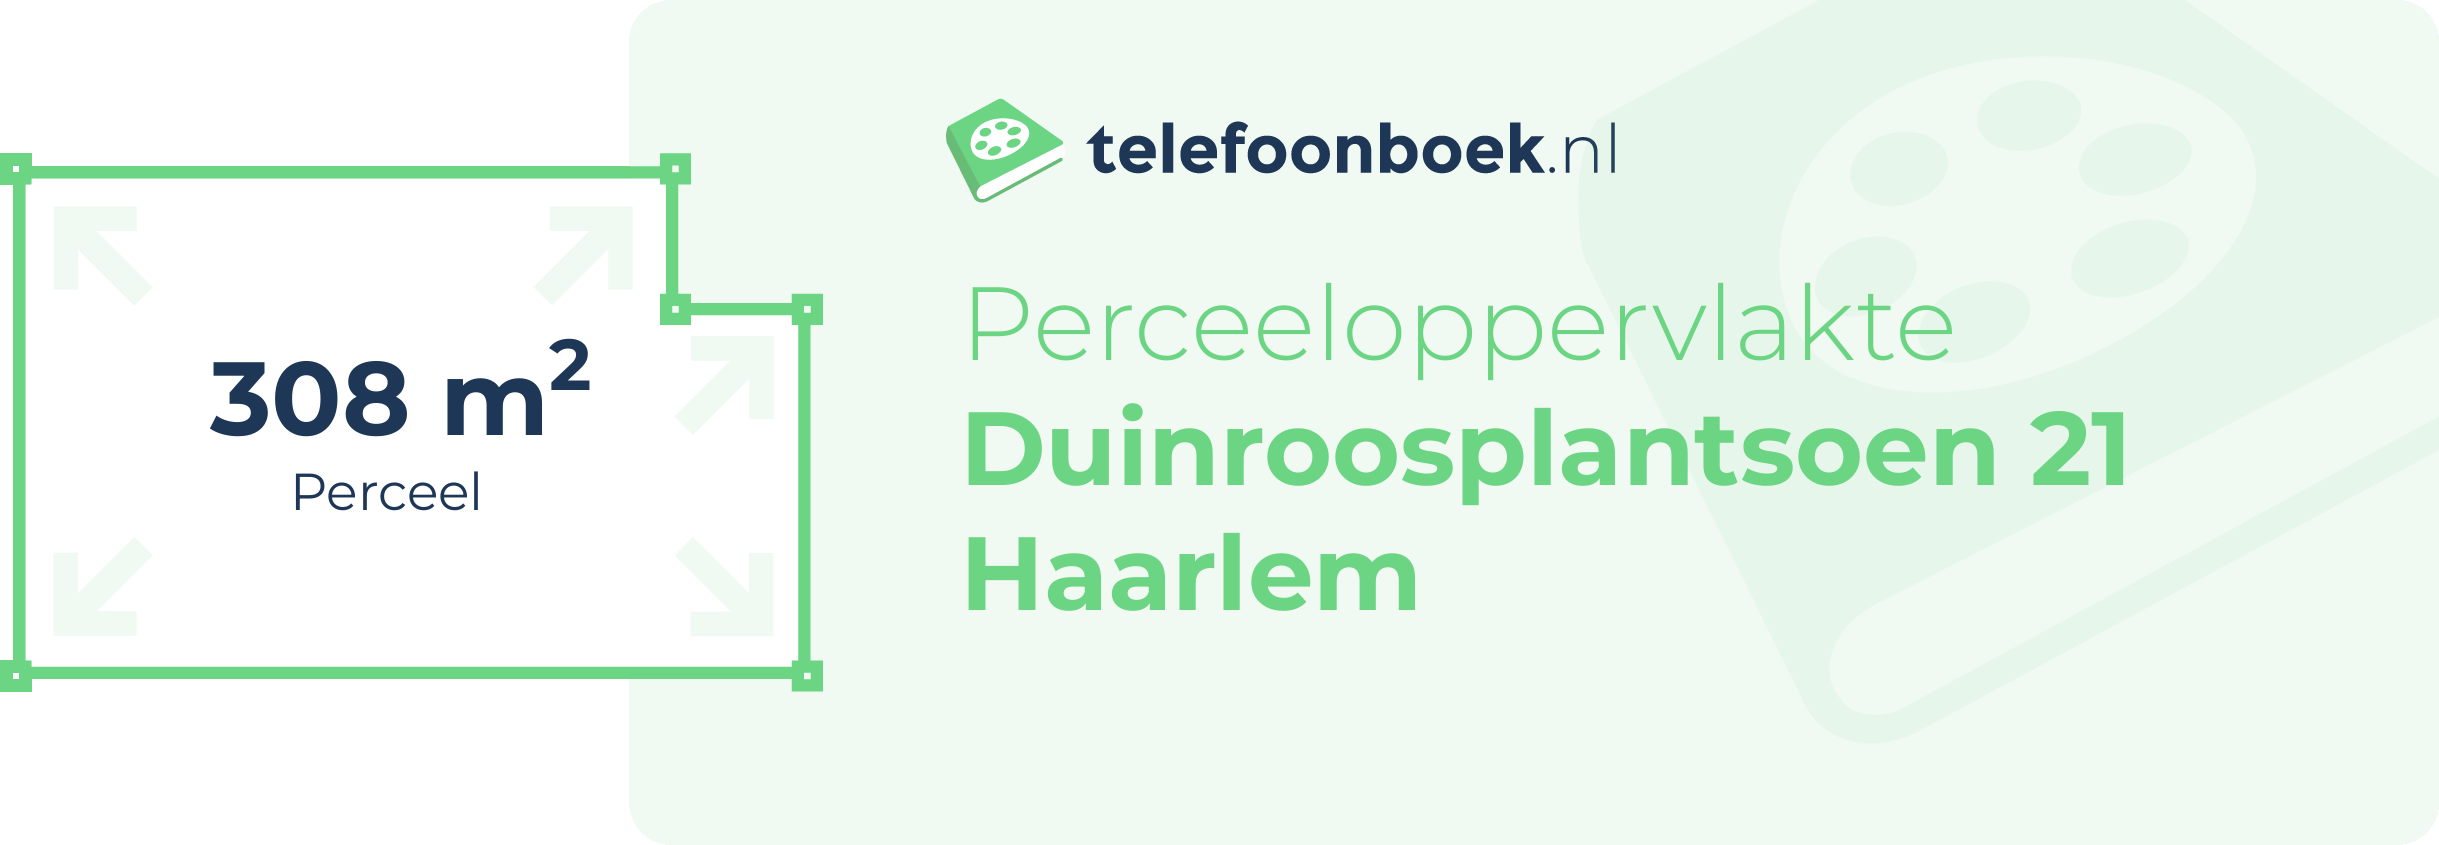 Perceeloppervlakte Duinroosplantsoen 21 Haarlem